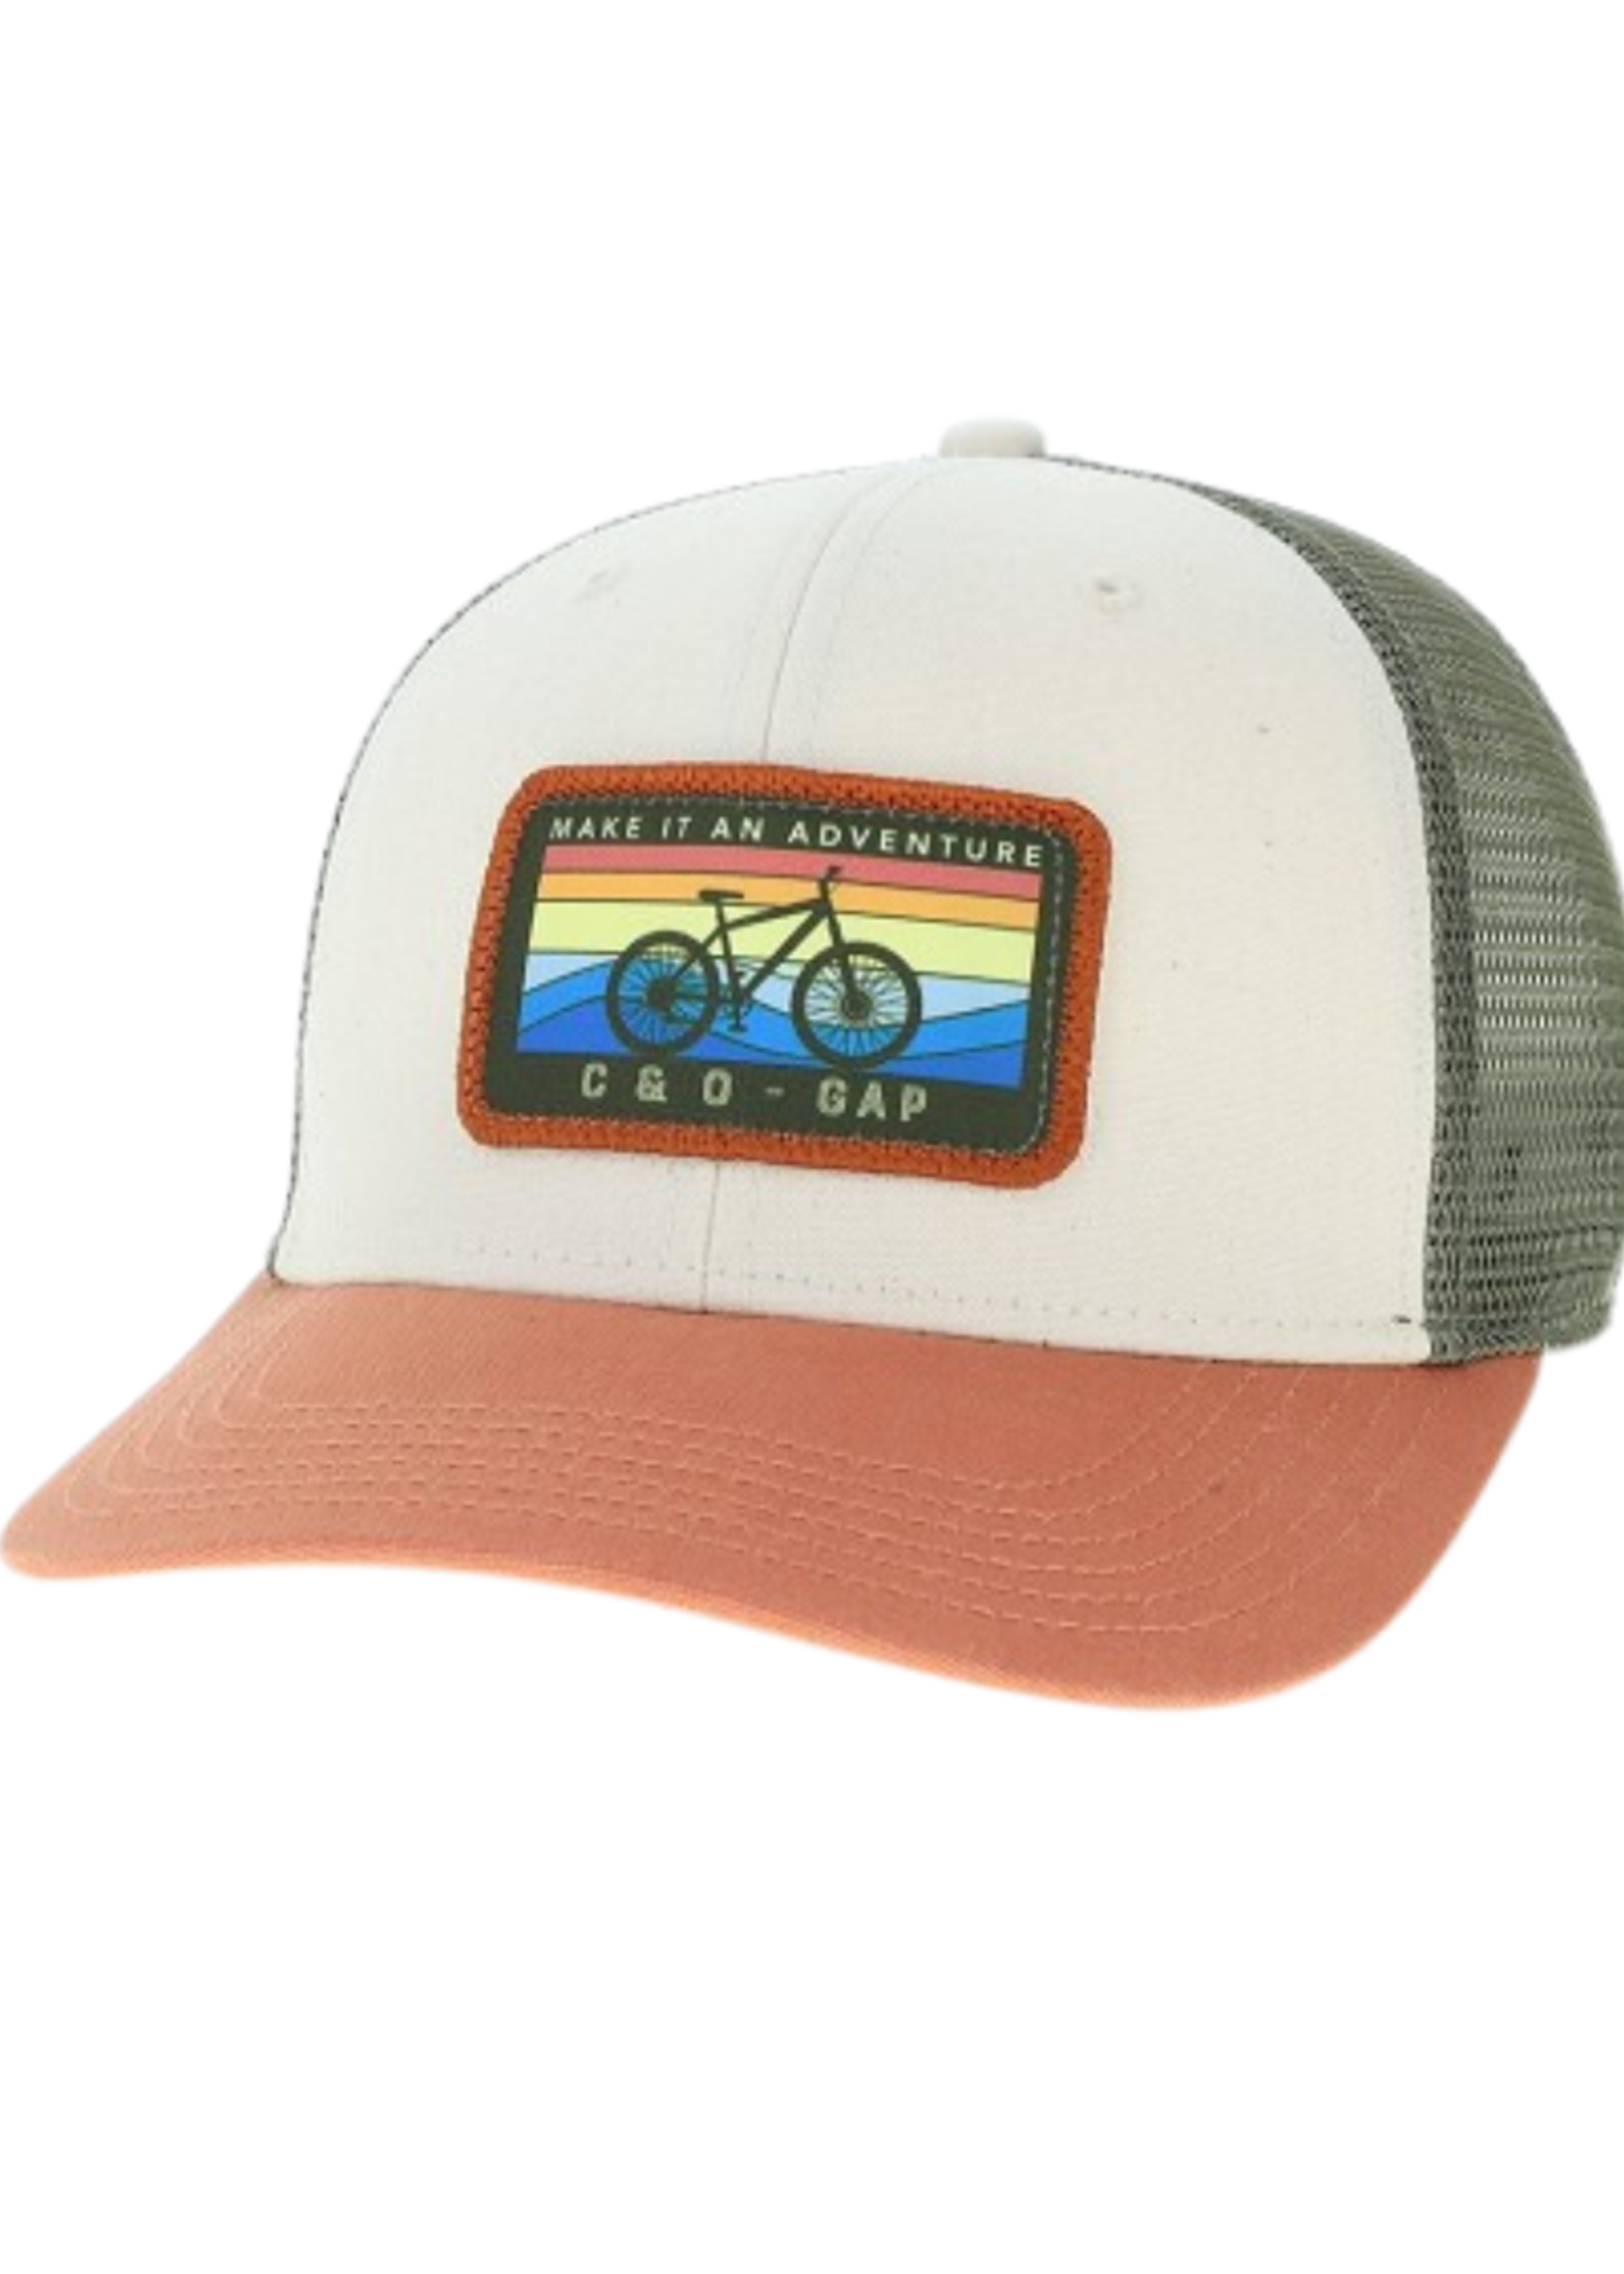 league legacy League Legacy - Make it an Adventure C&O - GAP Trucker Hat